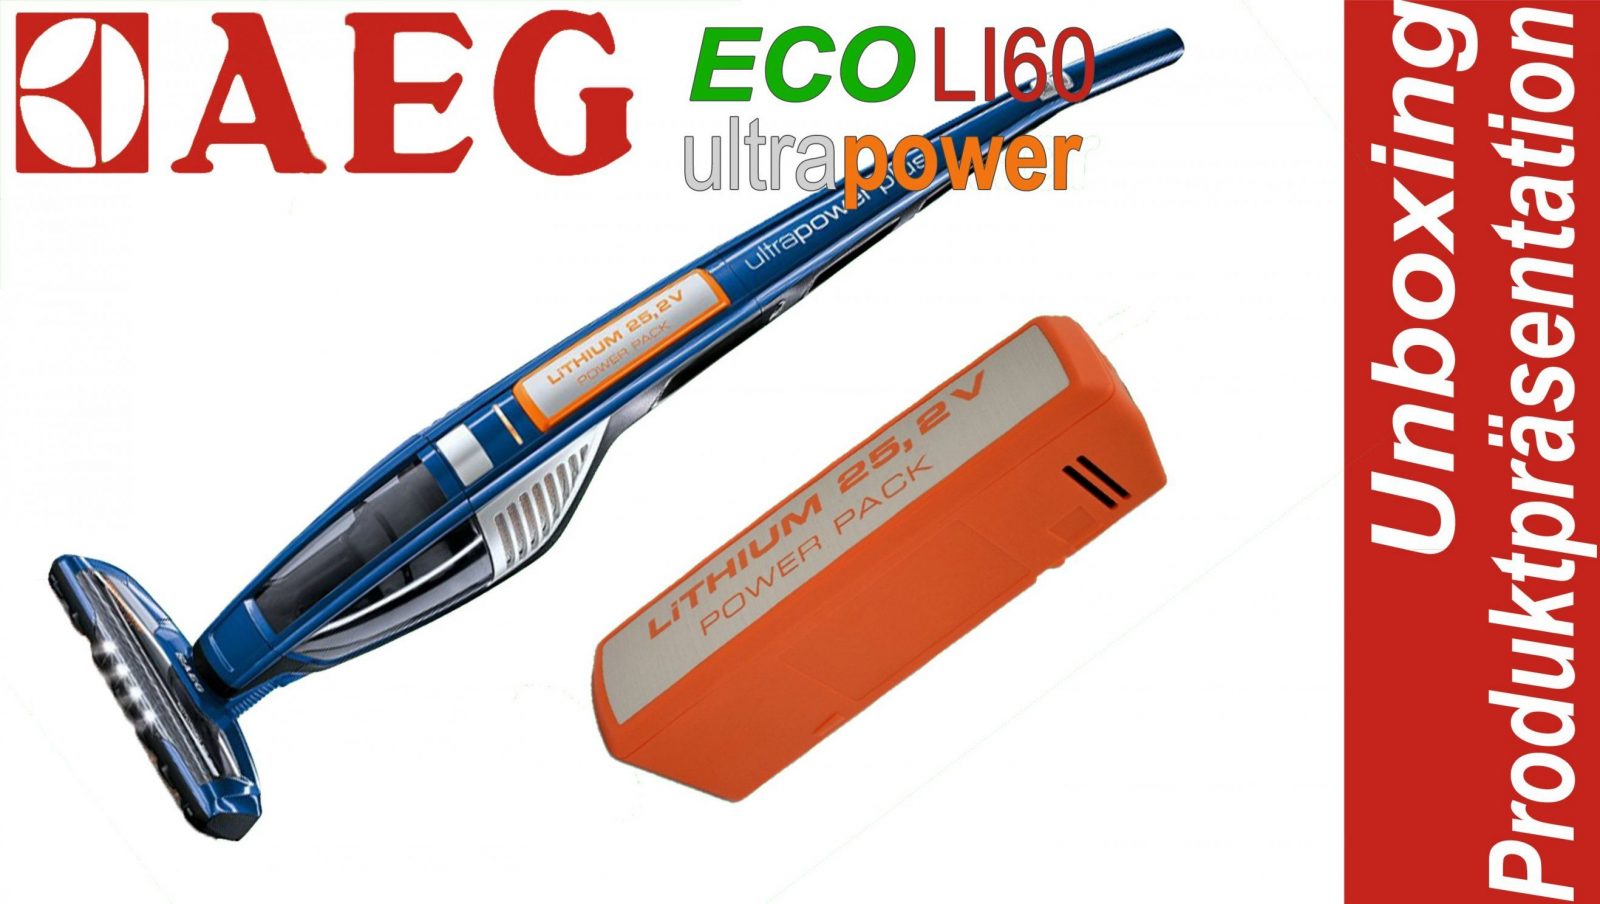 Aeg Eco Li60 Ultra Power Akkustaubsauger  Unboxing Und von Aeg Eco Li 60 Ultrapower Ag 5022 Photo